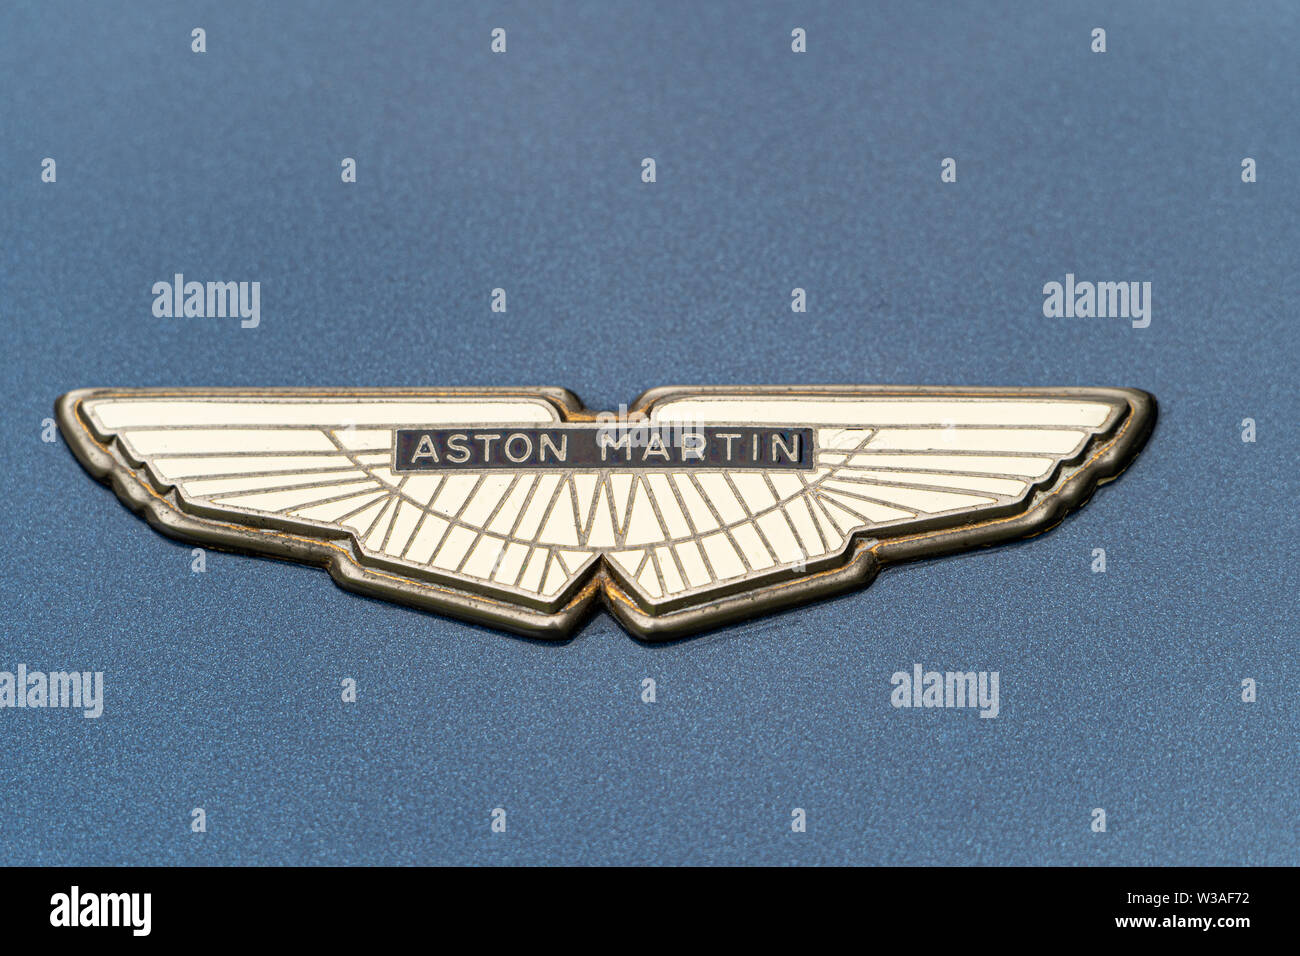 Aston Martin badge / logo on a metalic blue Aston Martin classic car Stock Photo